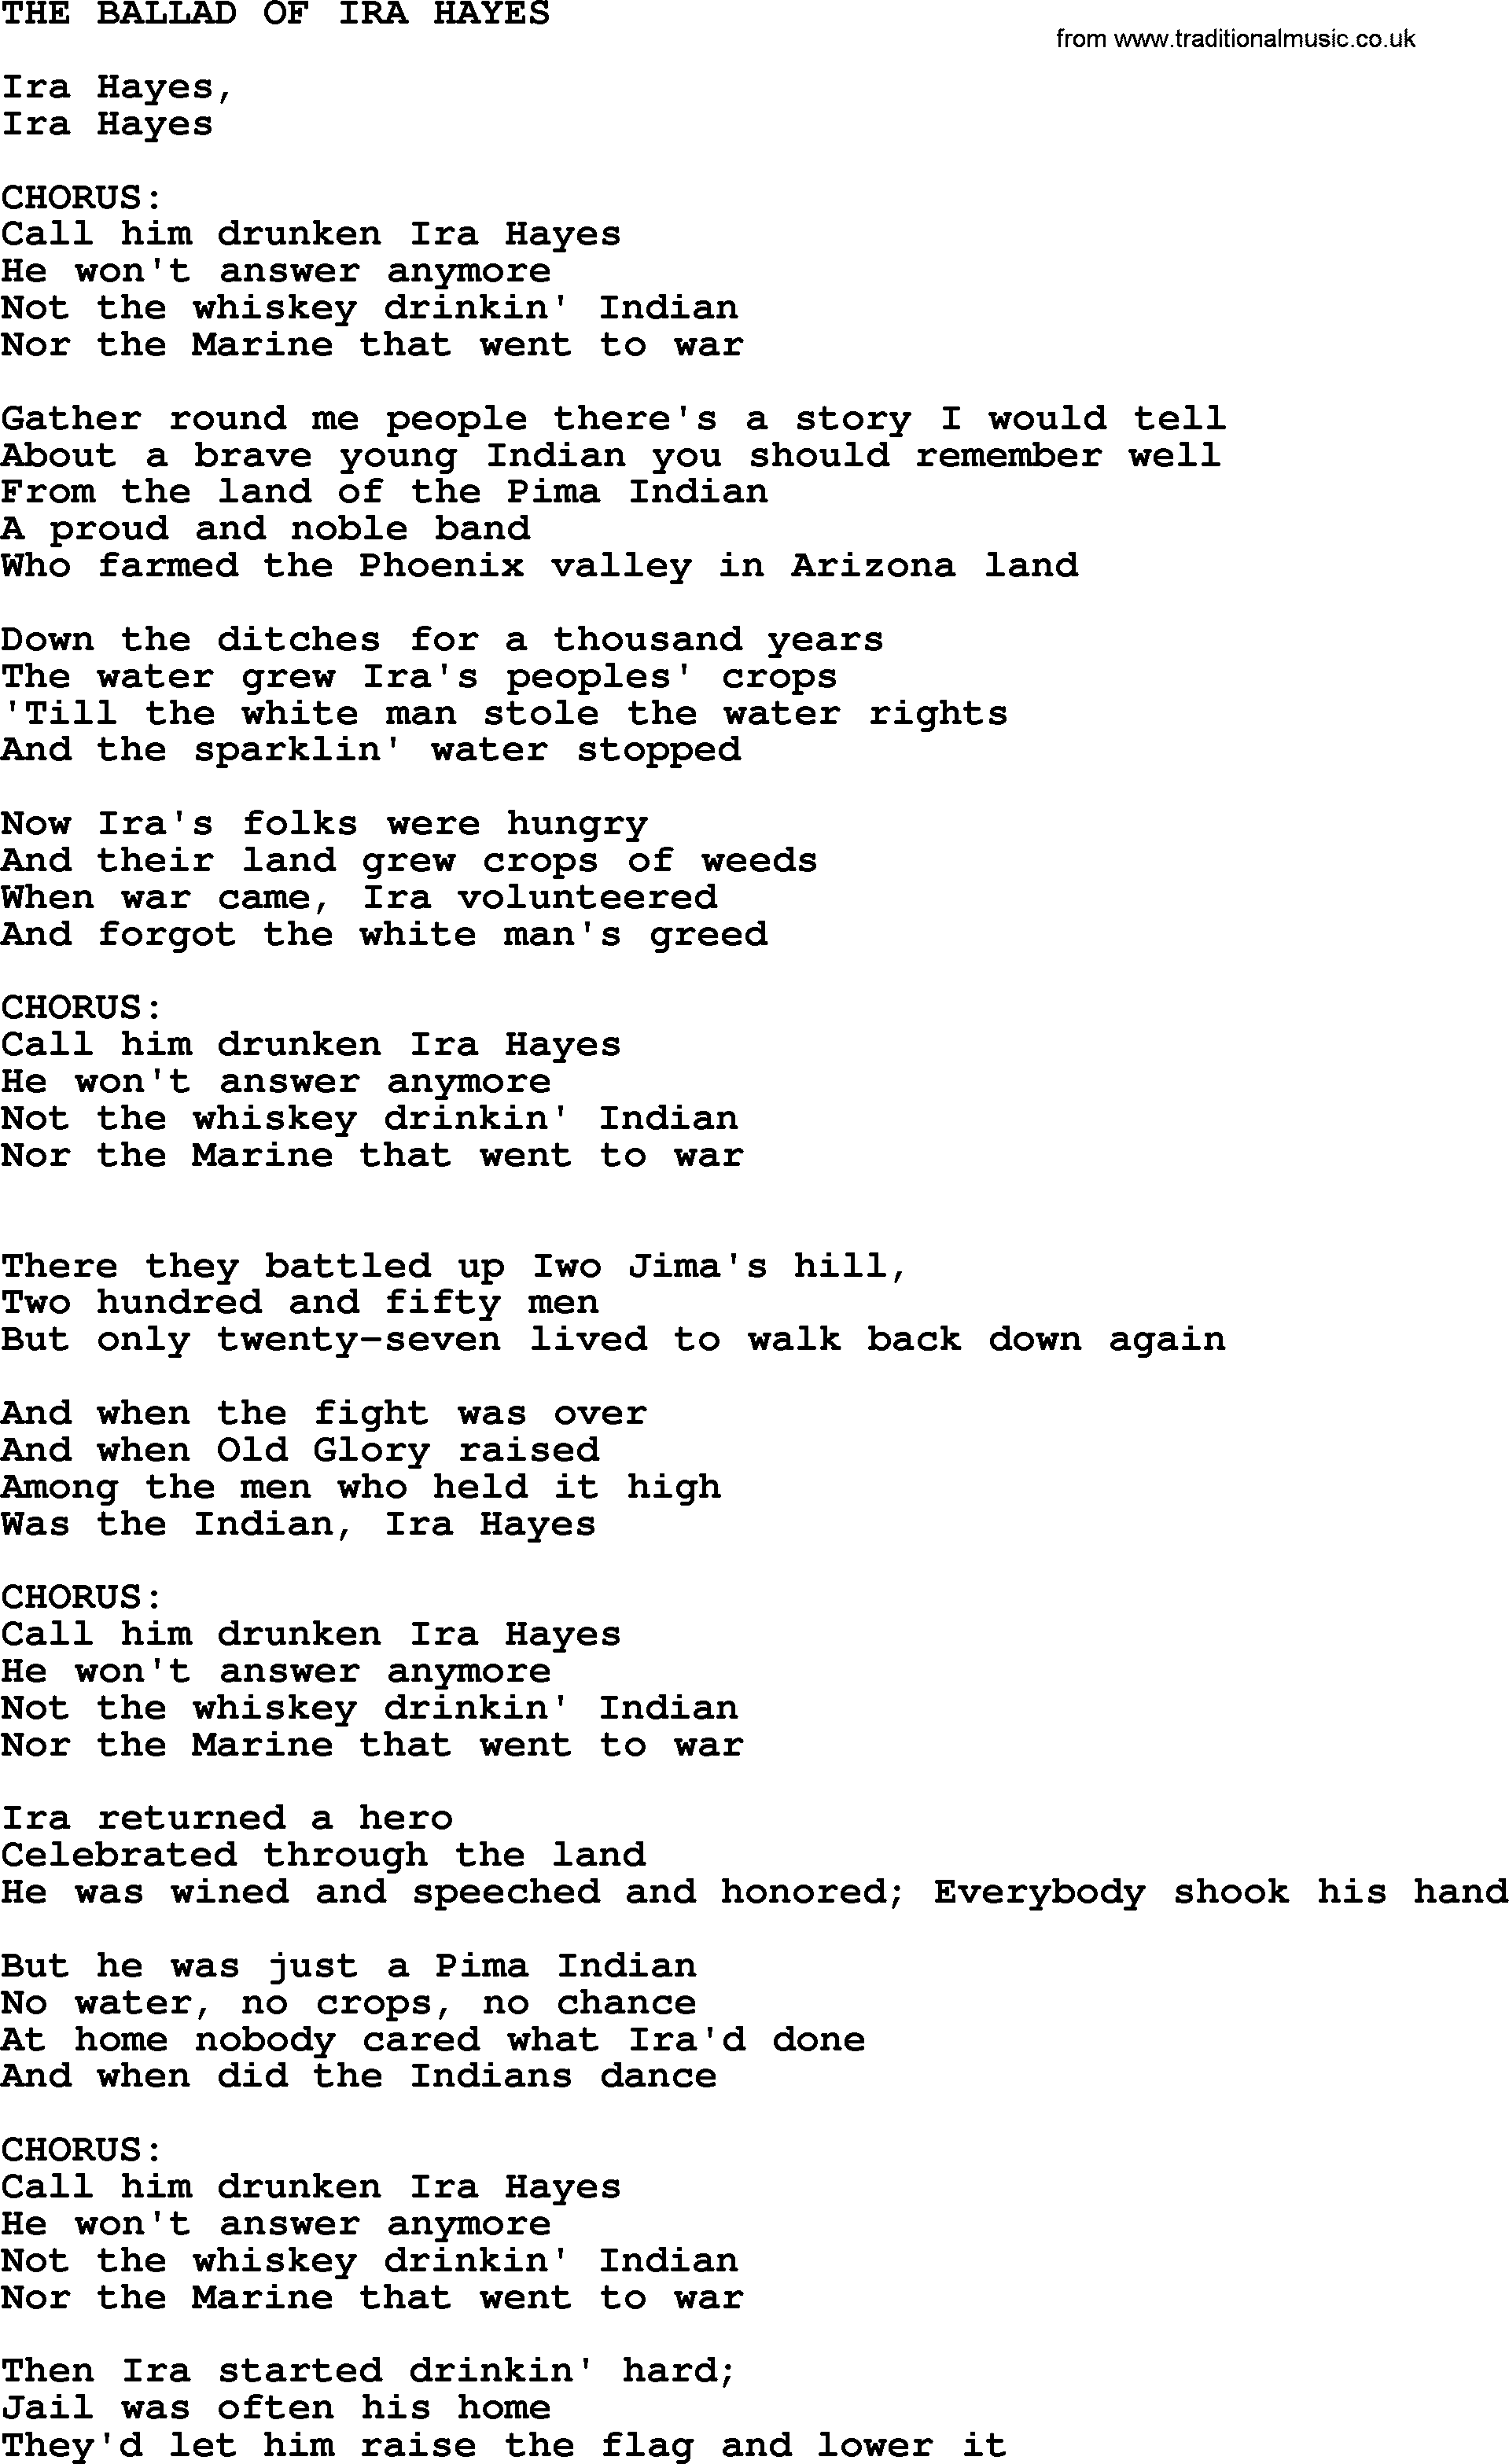 Johnny Cash song The Ballad Of Ira Hayes.txt lyrics